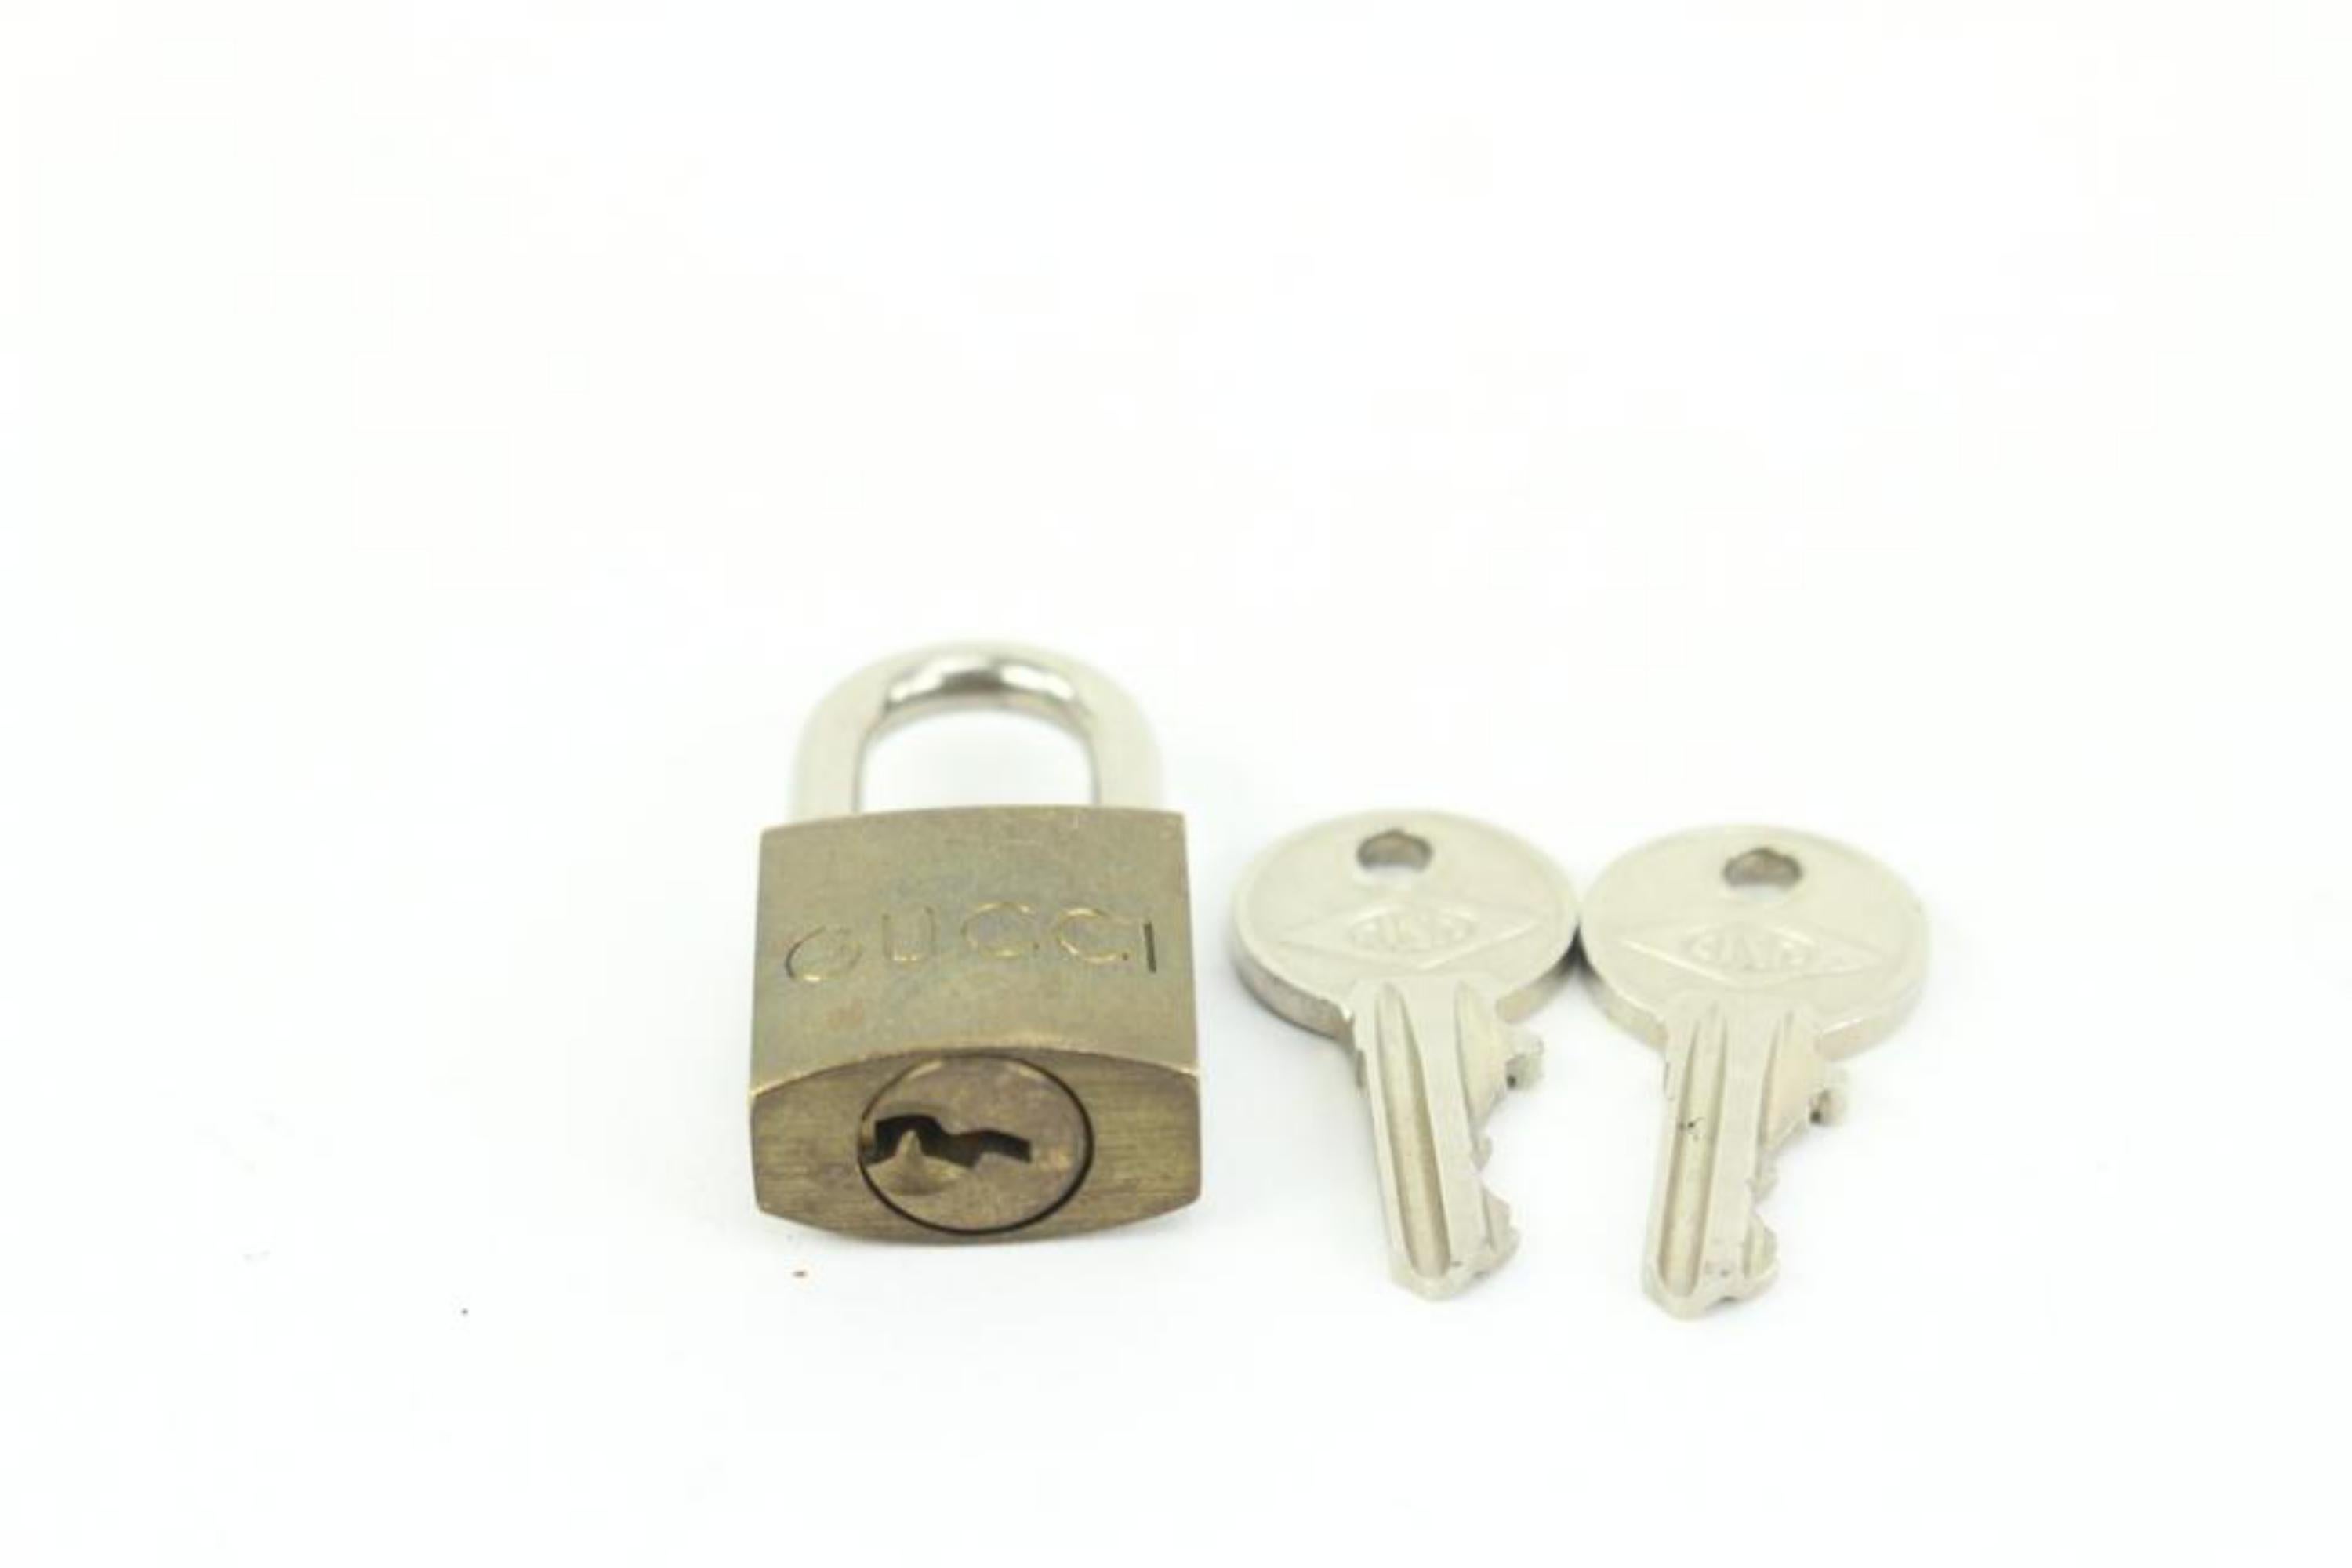 Gucci Brace G Logo Lock and Key Set Cadena Bag Charm Padlock 69g315s 1